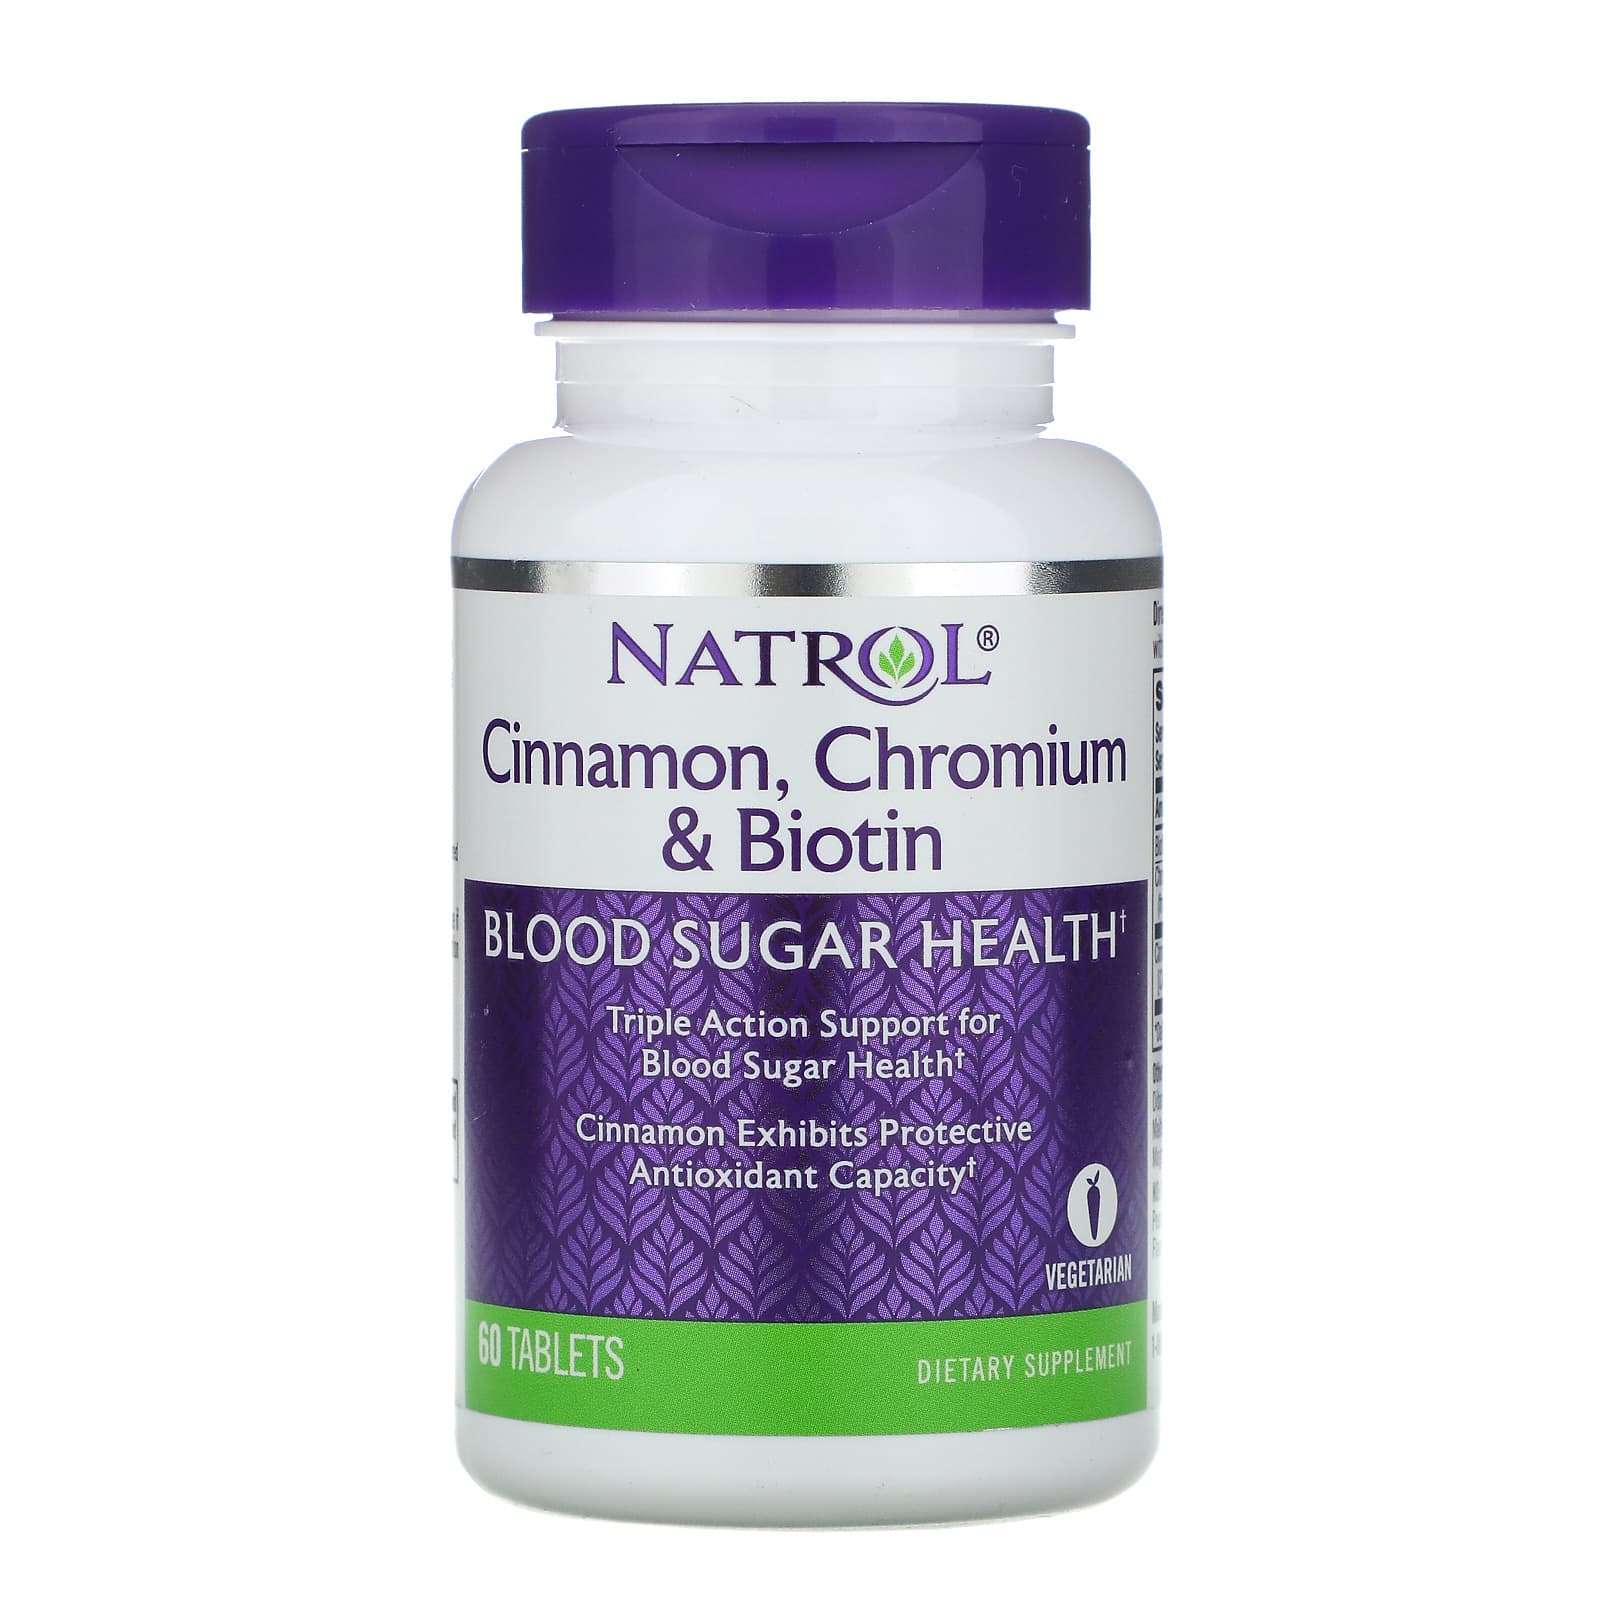 Natrol Cinnamon, Chromium & Biotin for Blood Sugar Health tablets